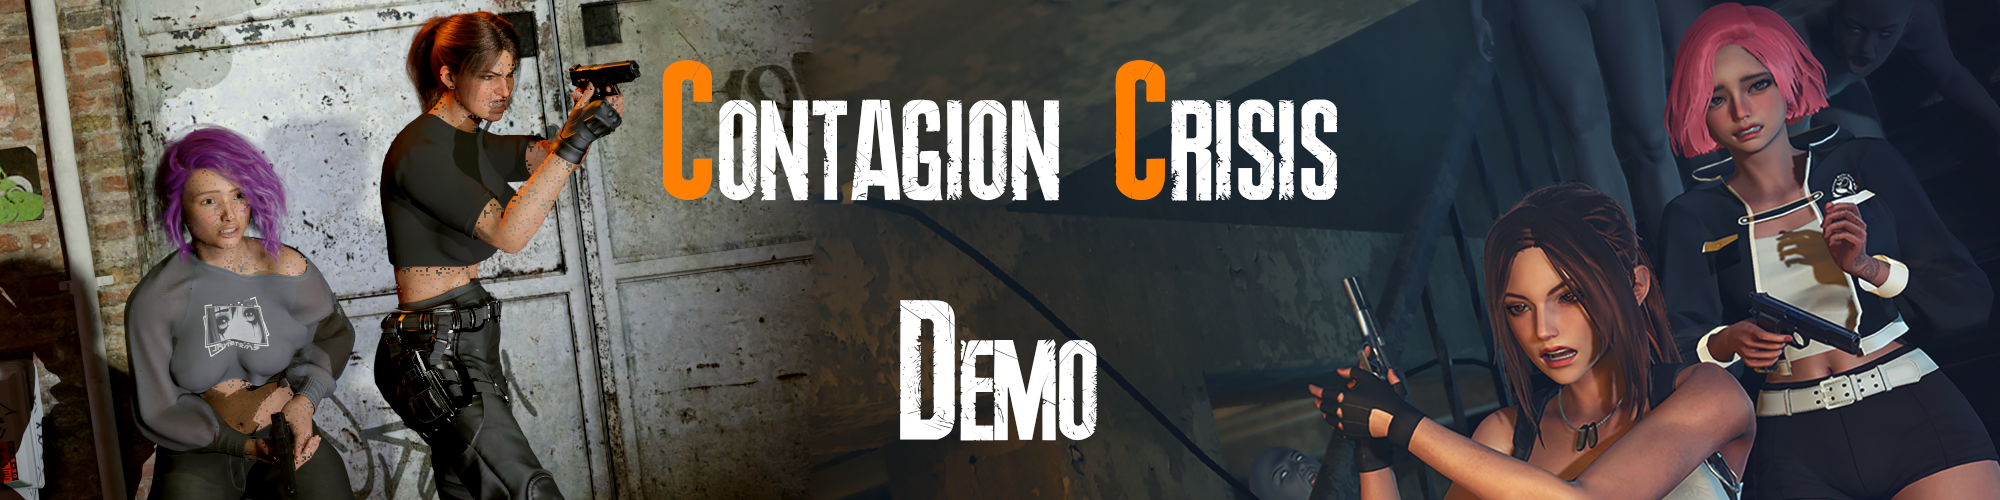 Contagion Crisis poster